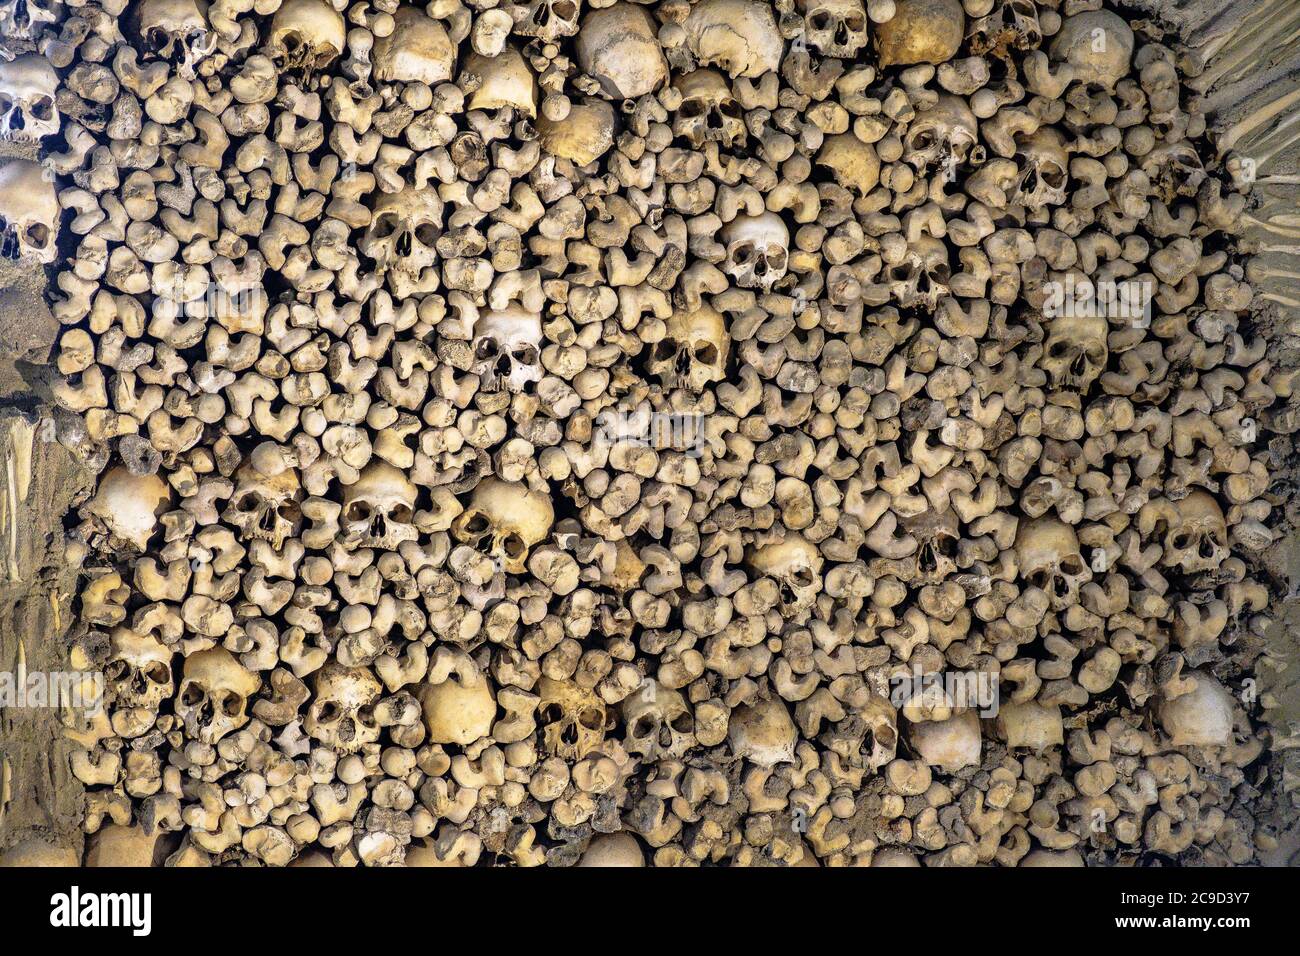 0827 Chapel of Bones - Evora, Mauerdetail mit Skelettresten Stockfoto